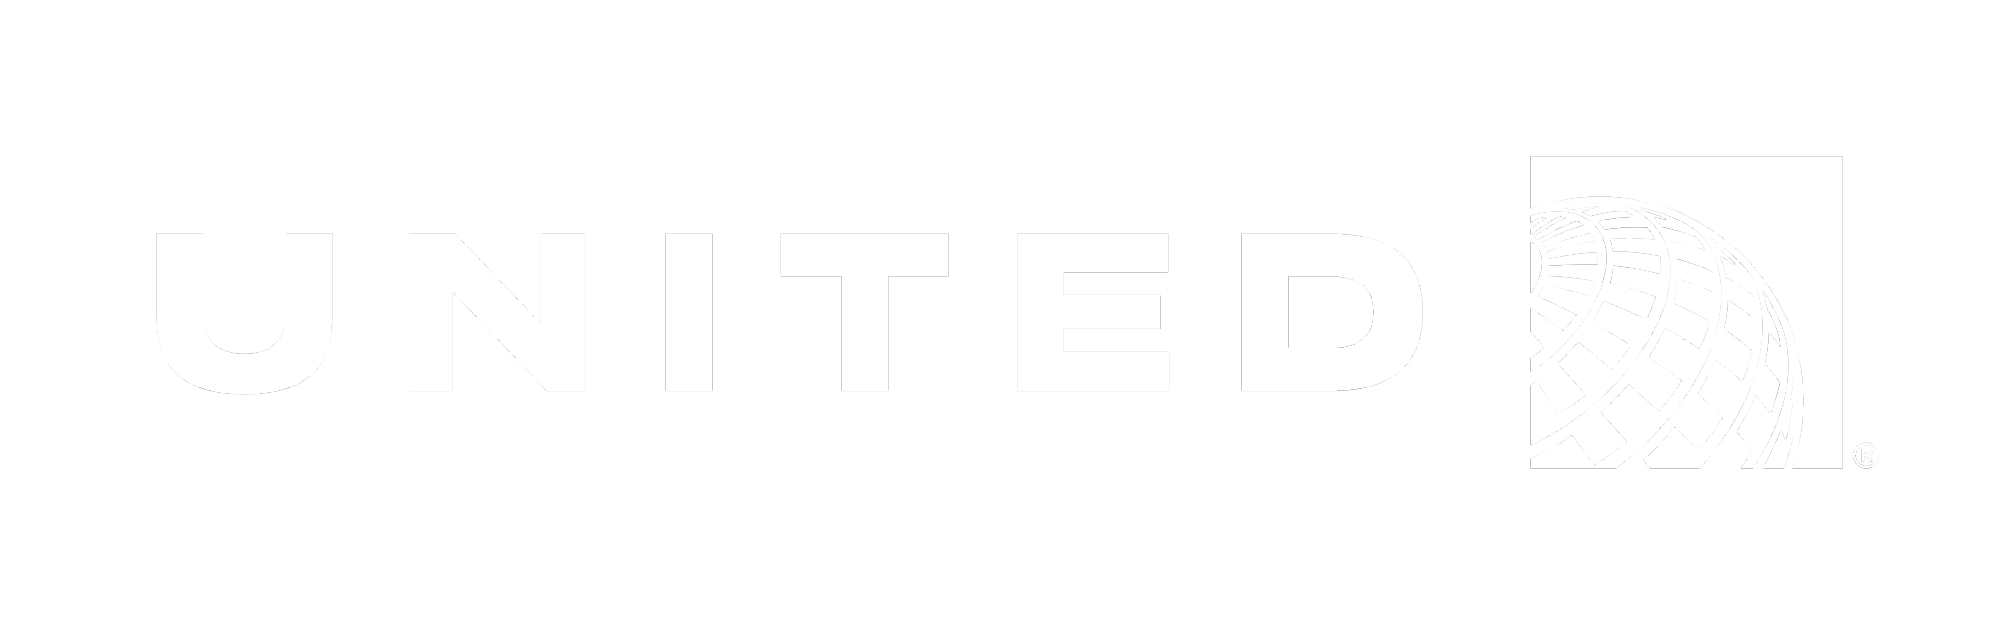 Logo de United Airlines